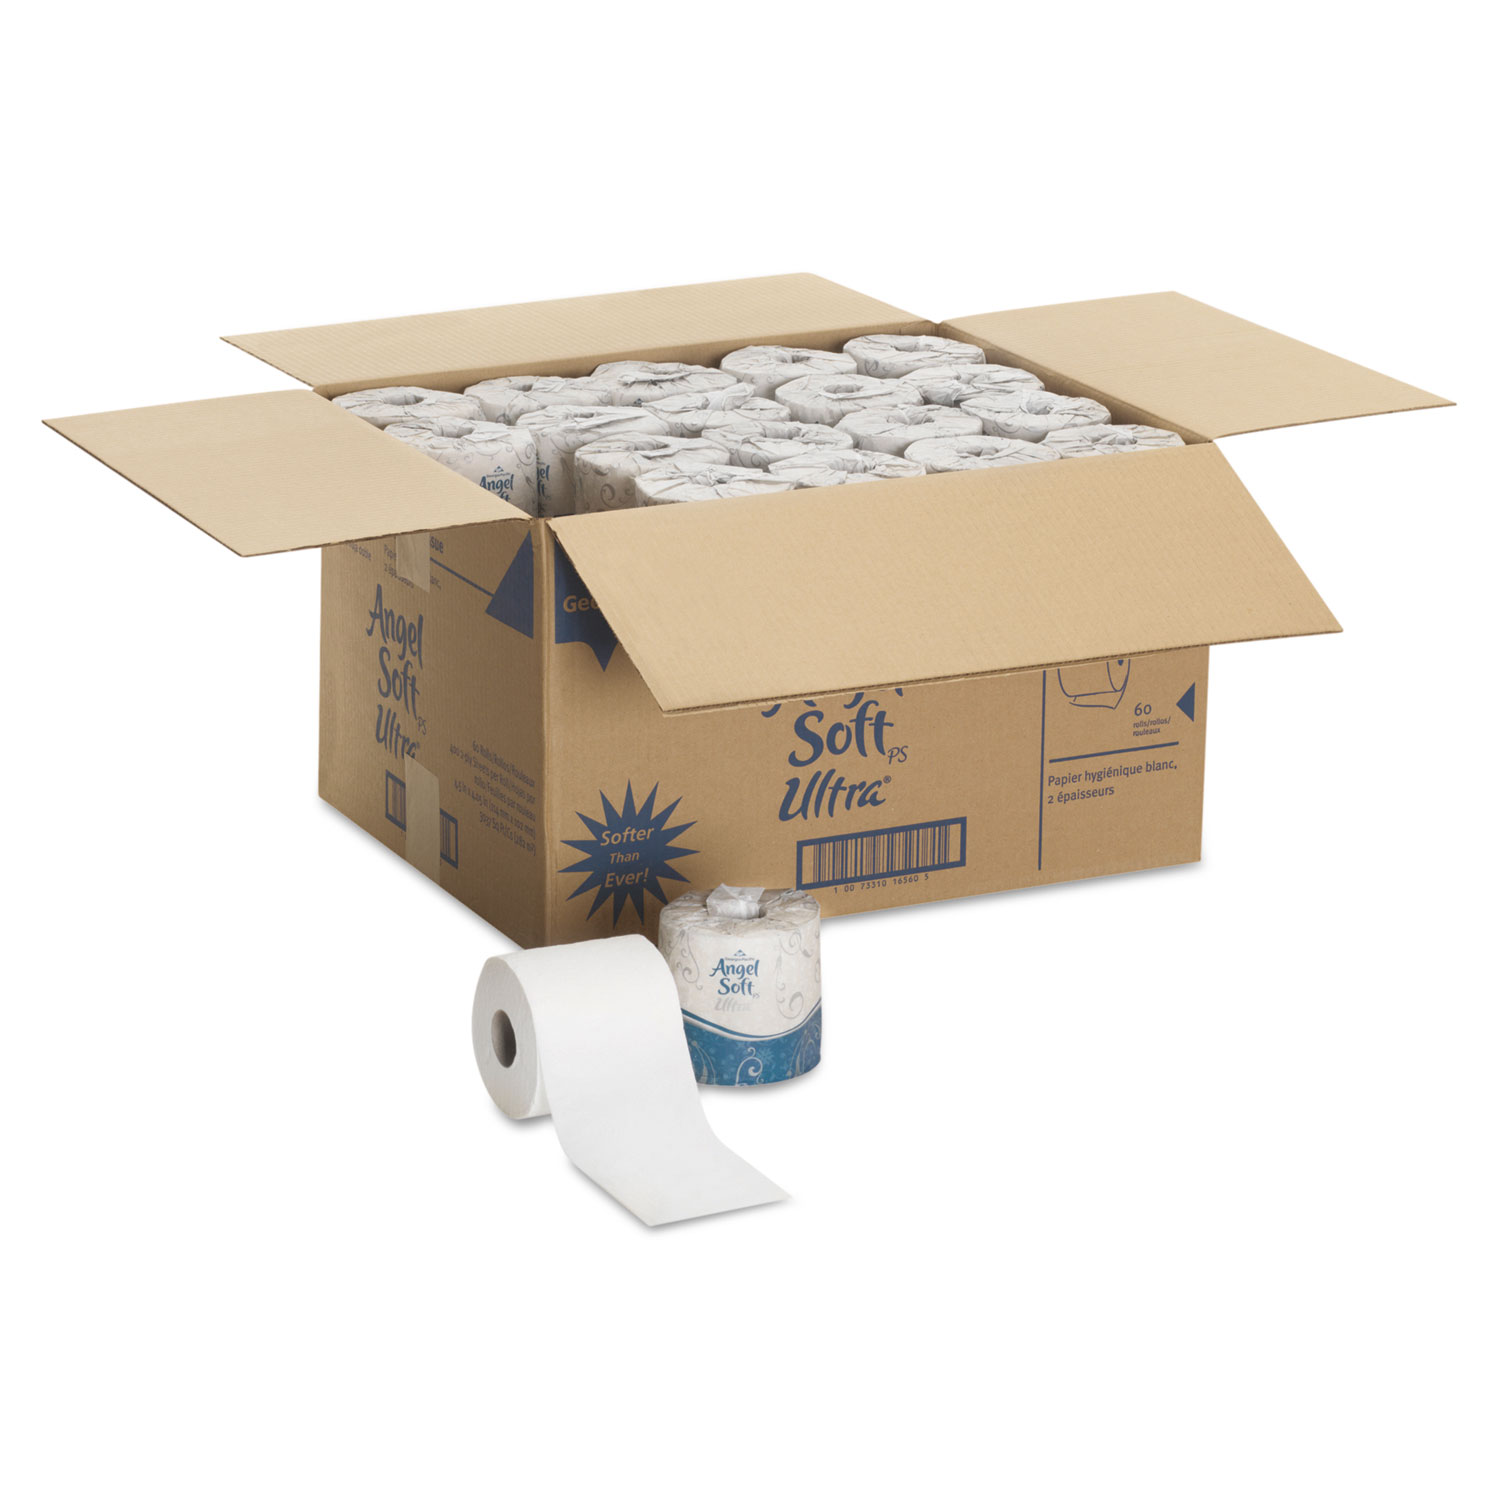 Angel Soft ps Ultra 2-Ply Premium Bathroom Tissue, White, 400 Sheets Roll, 60/Carton